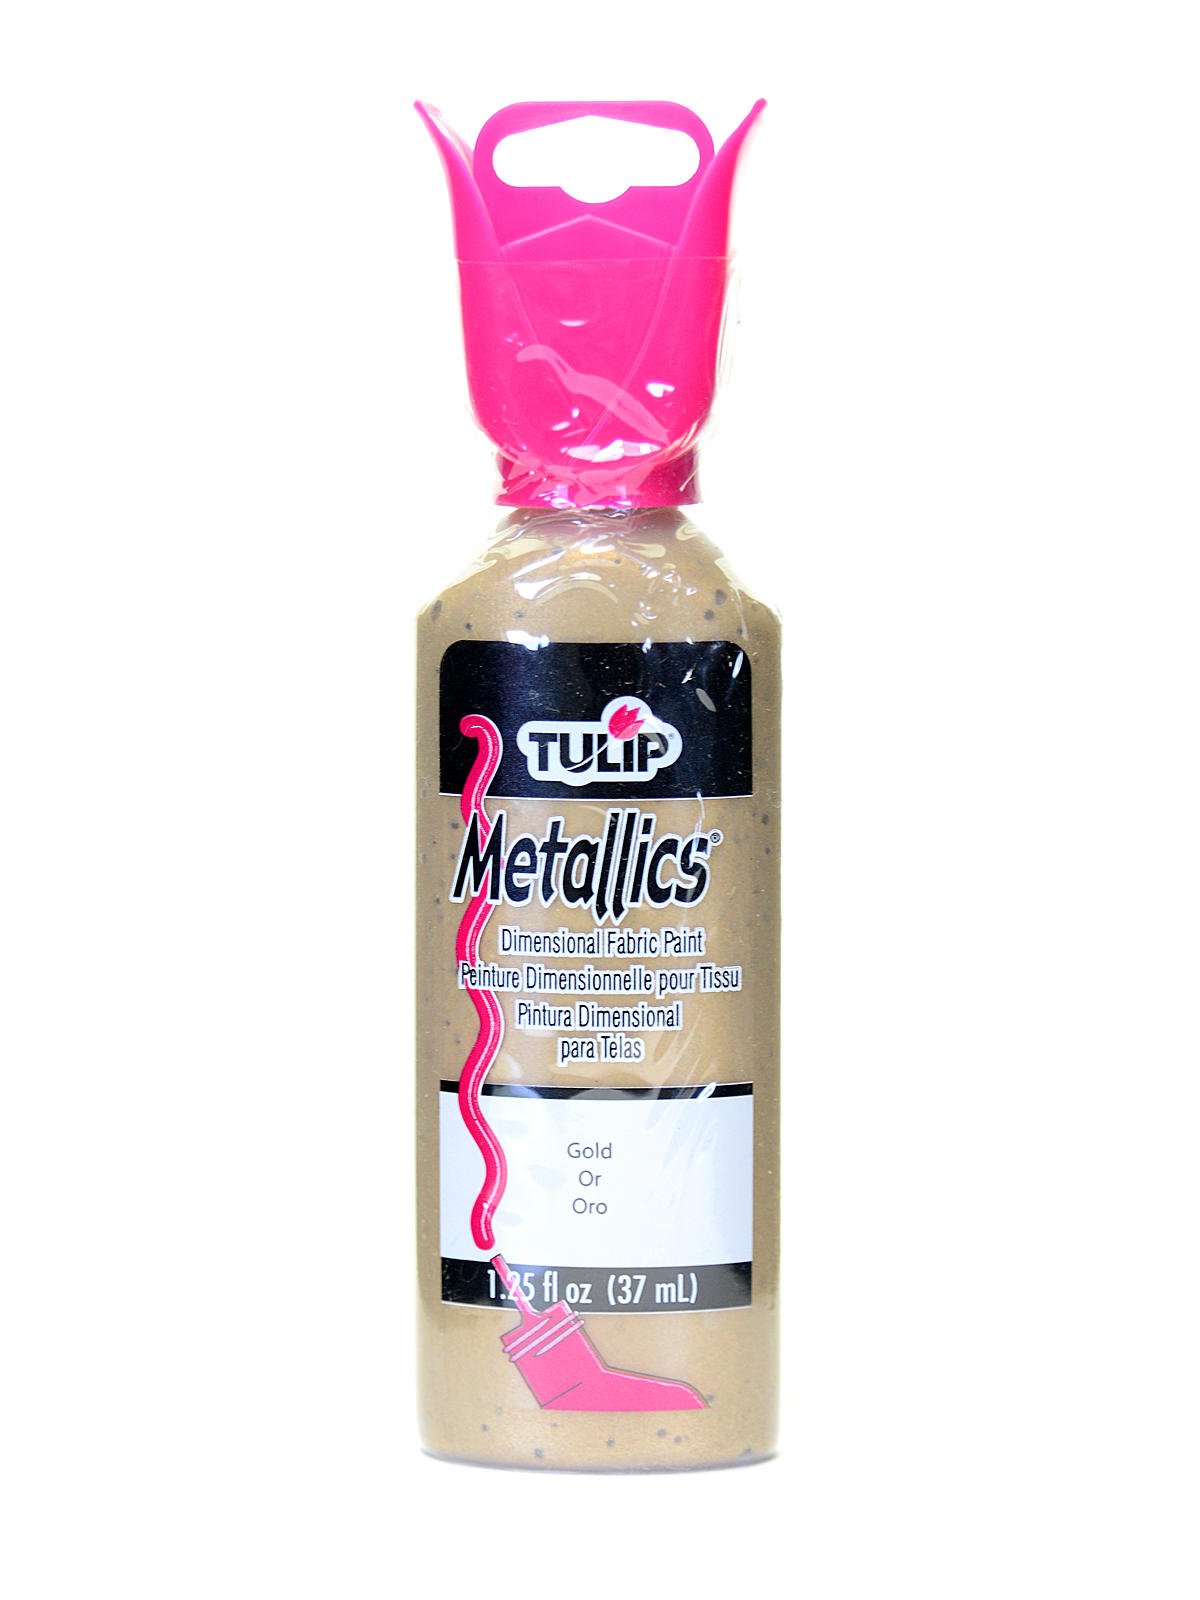 Tulip Glitter Dimensional Fabric Paint, Silver - 4 fl oz bottle